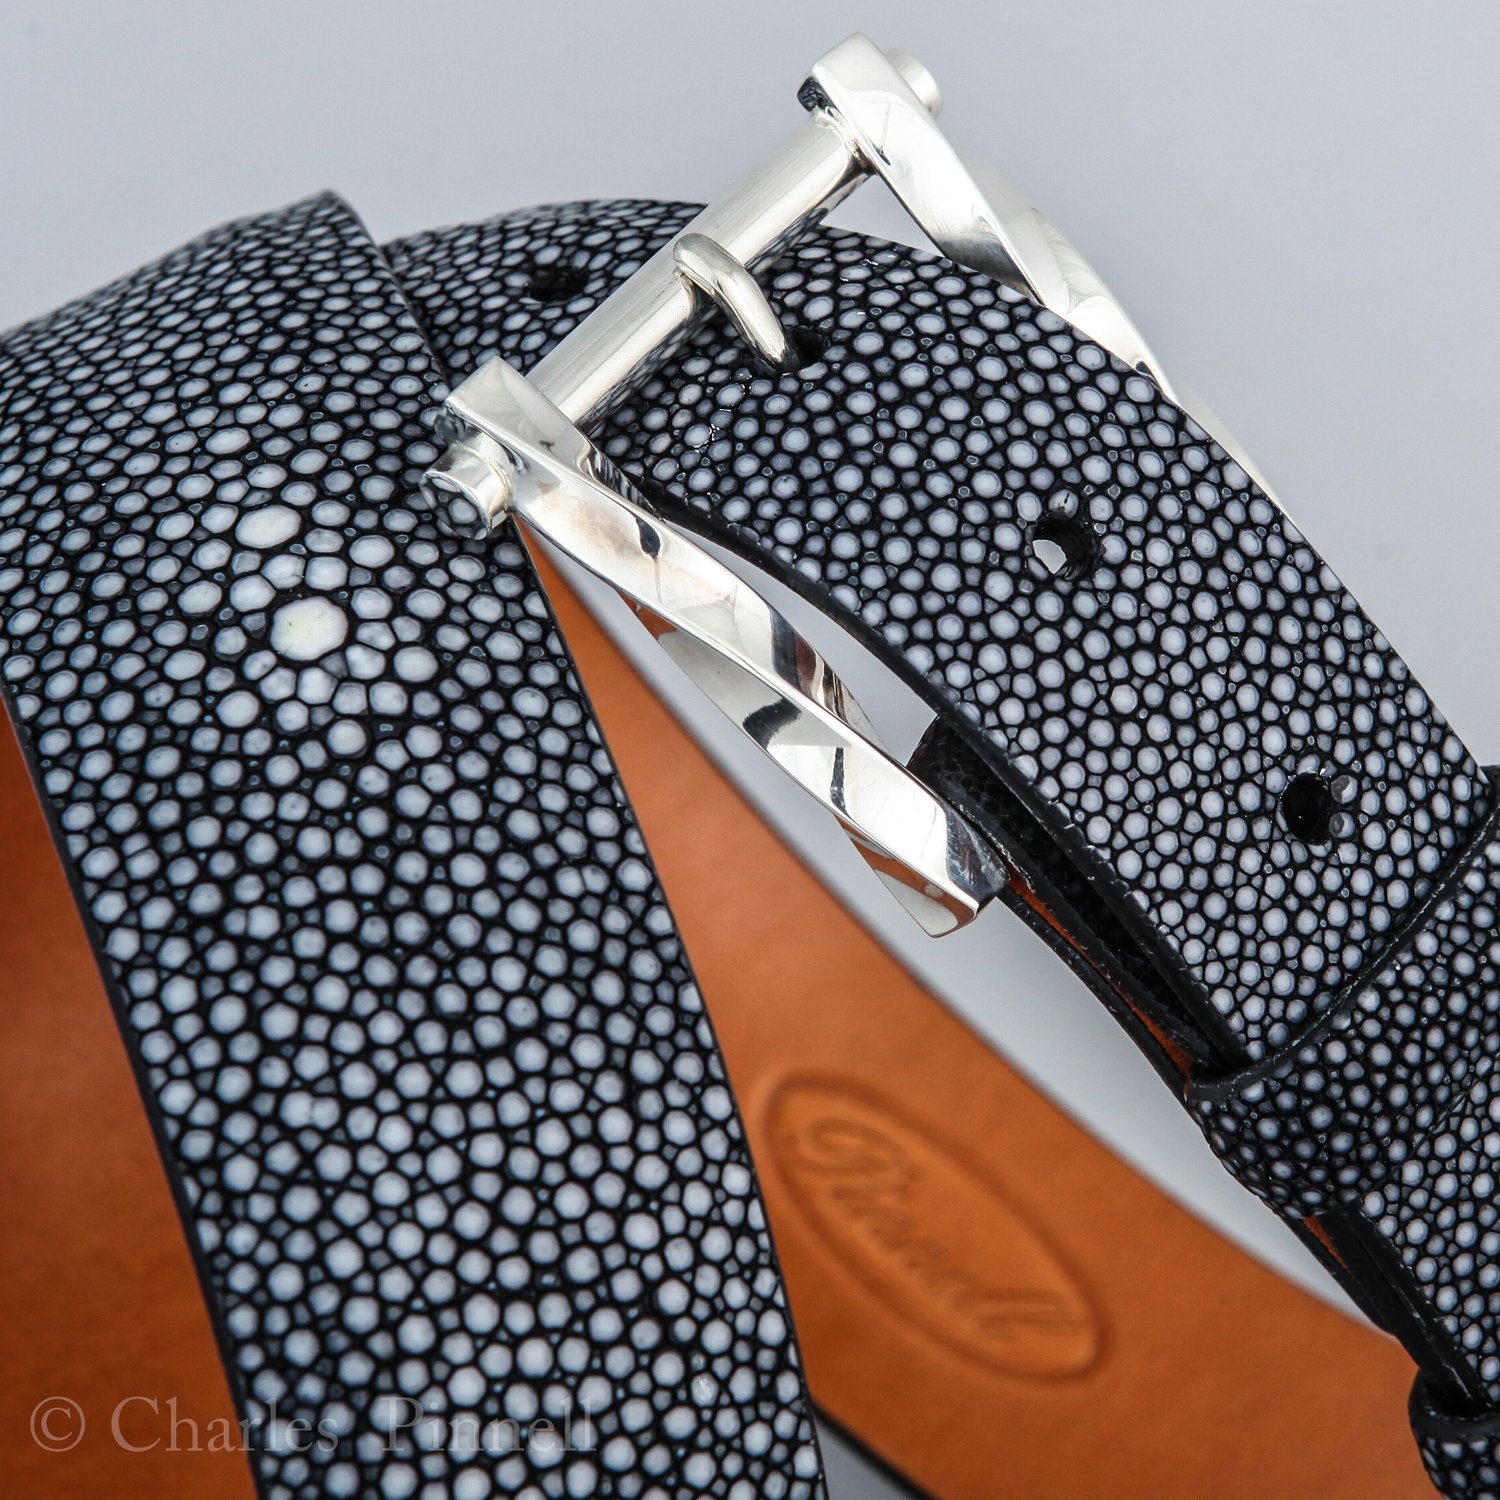 Needlepoint — Pinnell Custom Leather